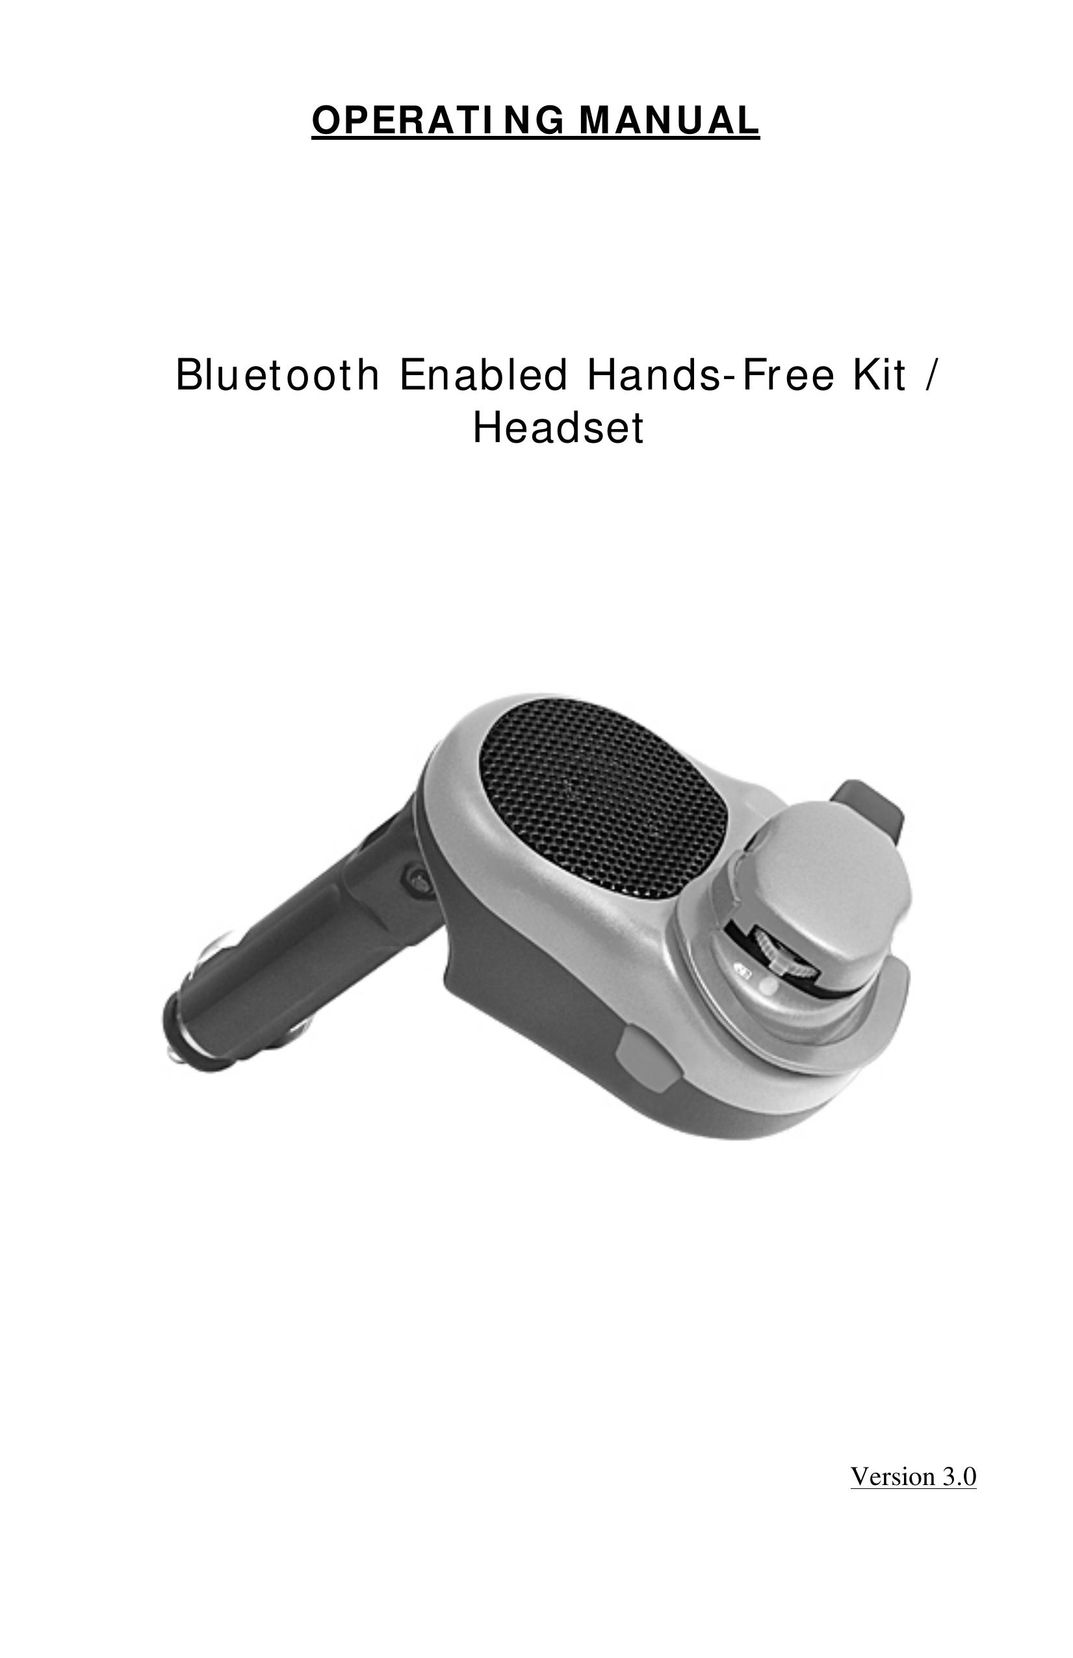 Sony Ericsson Bluetooth Enabled Hands-Free Kit /Headset Headphones User Manual